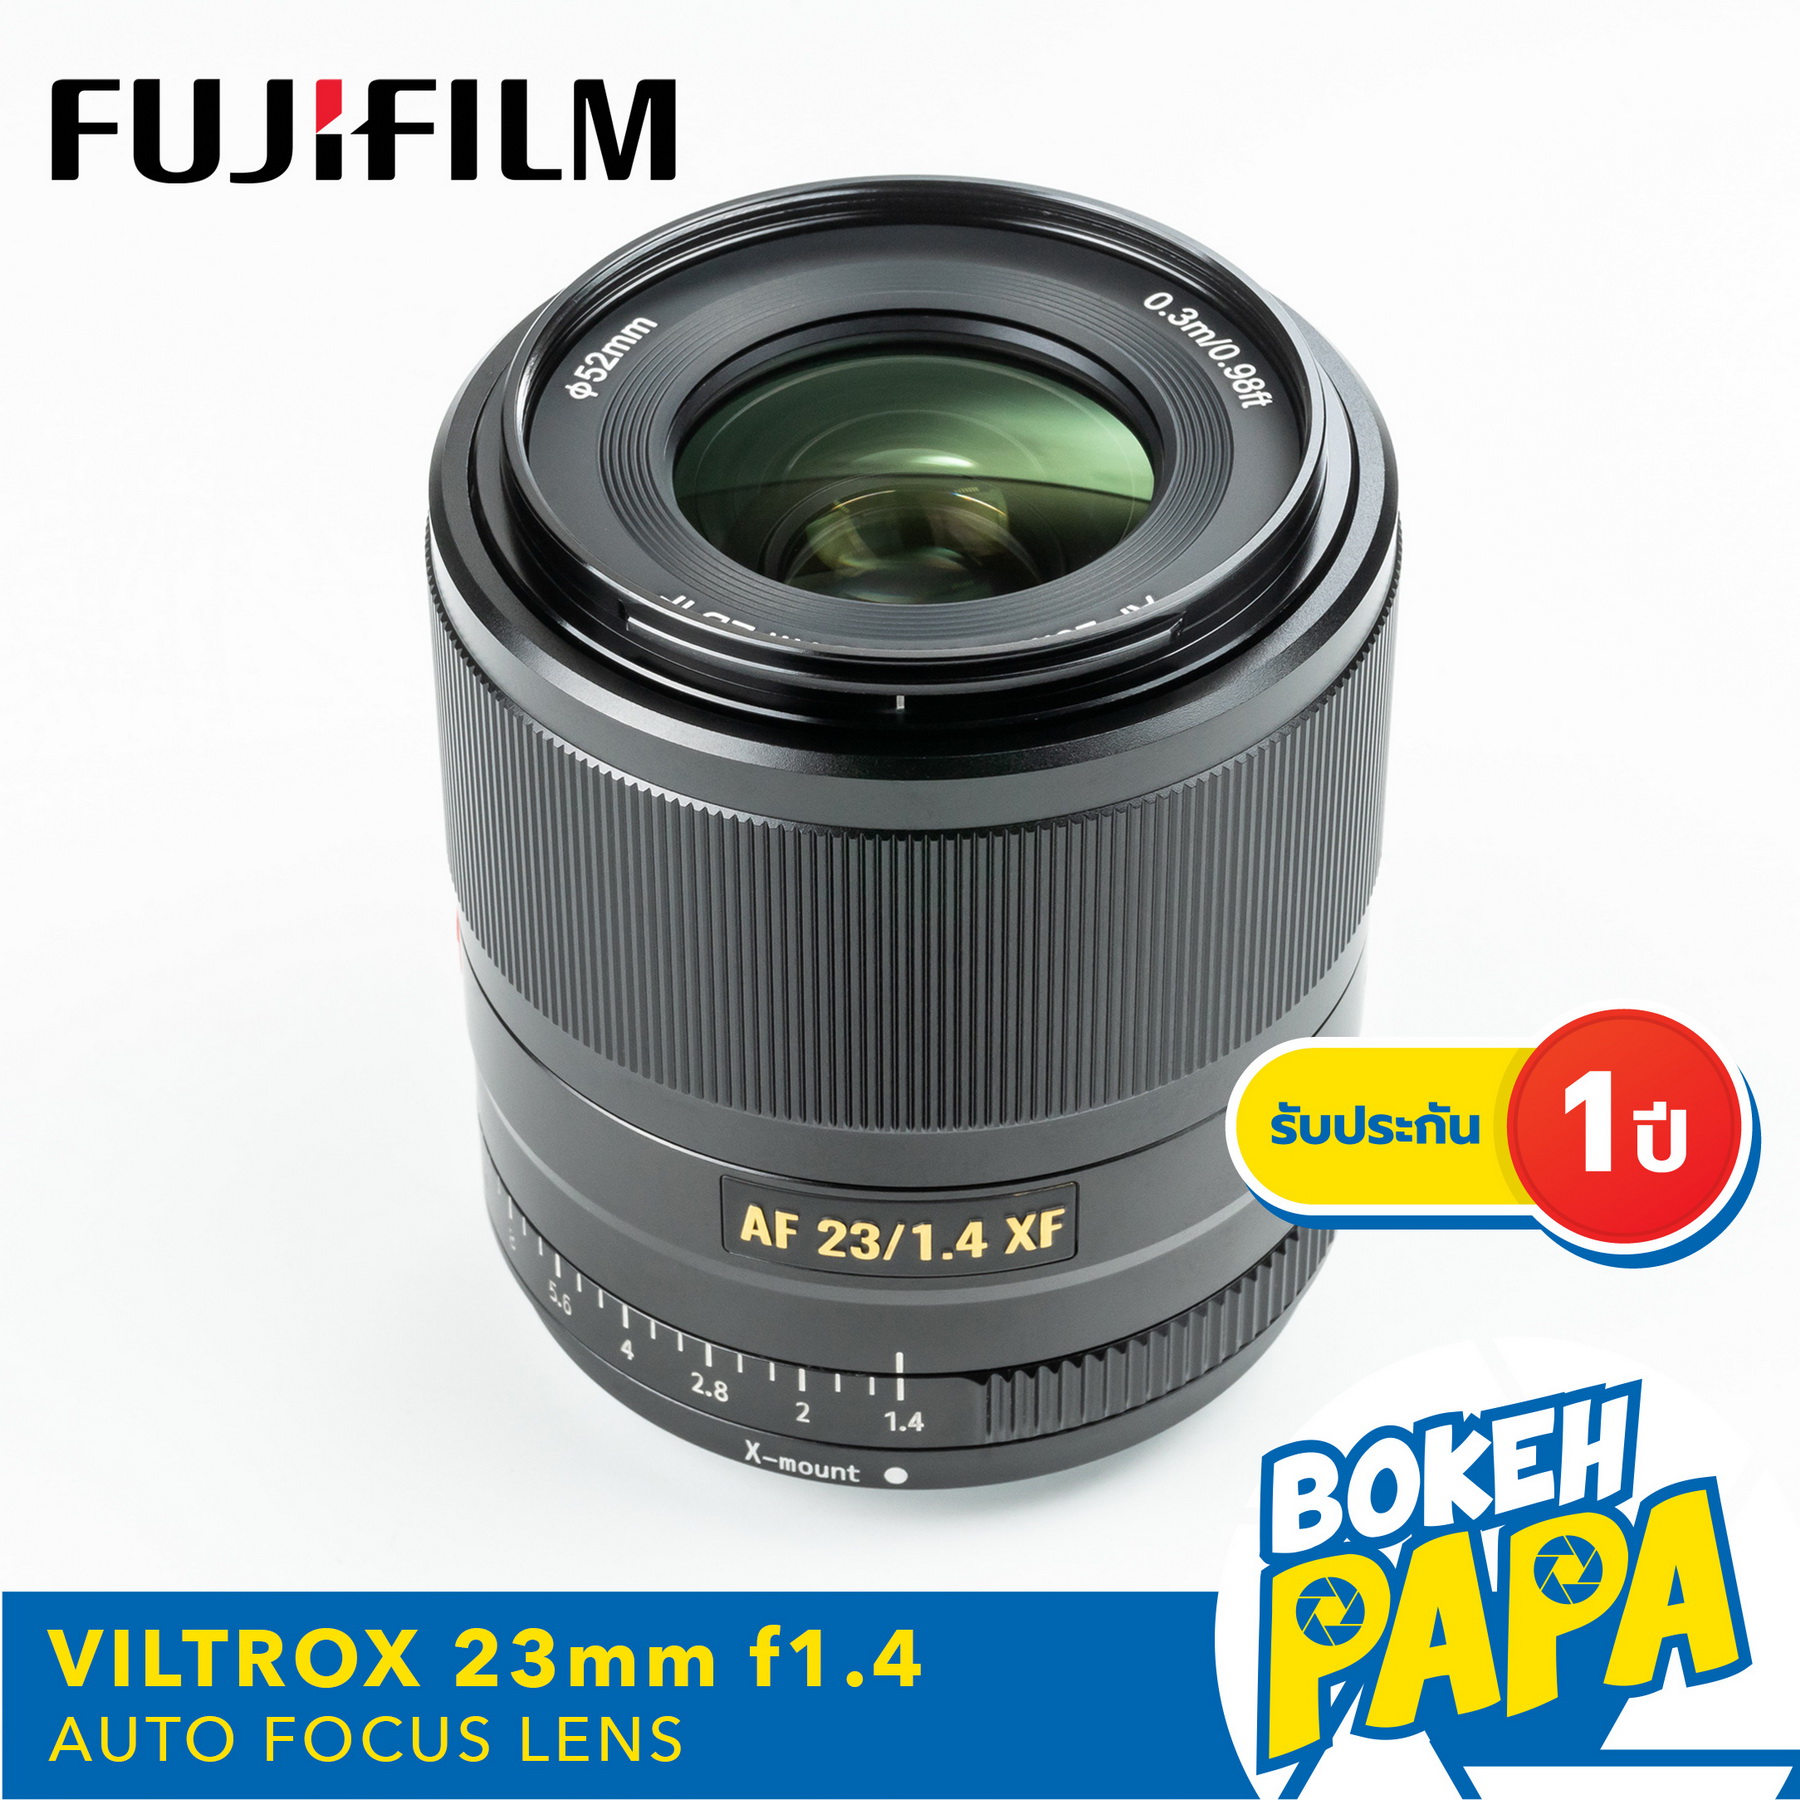 VILTROX 23mm F1.4 STM FUJI FX เลนส์ ออโต้โฟกัส AF สำหรับใส่กล้อง FUJI Mirrorless ได้ทุกรุ่น ( VILTROX AUTO FOCUS Lens 23 MM F1.4 ) ( เมาท์  X Mount ) ( กล้อง ฟูจิ )